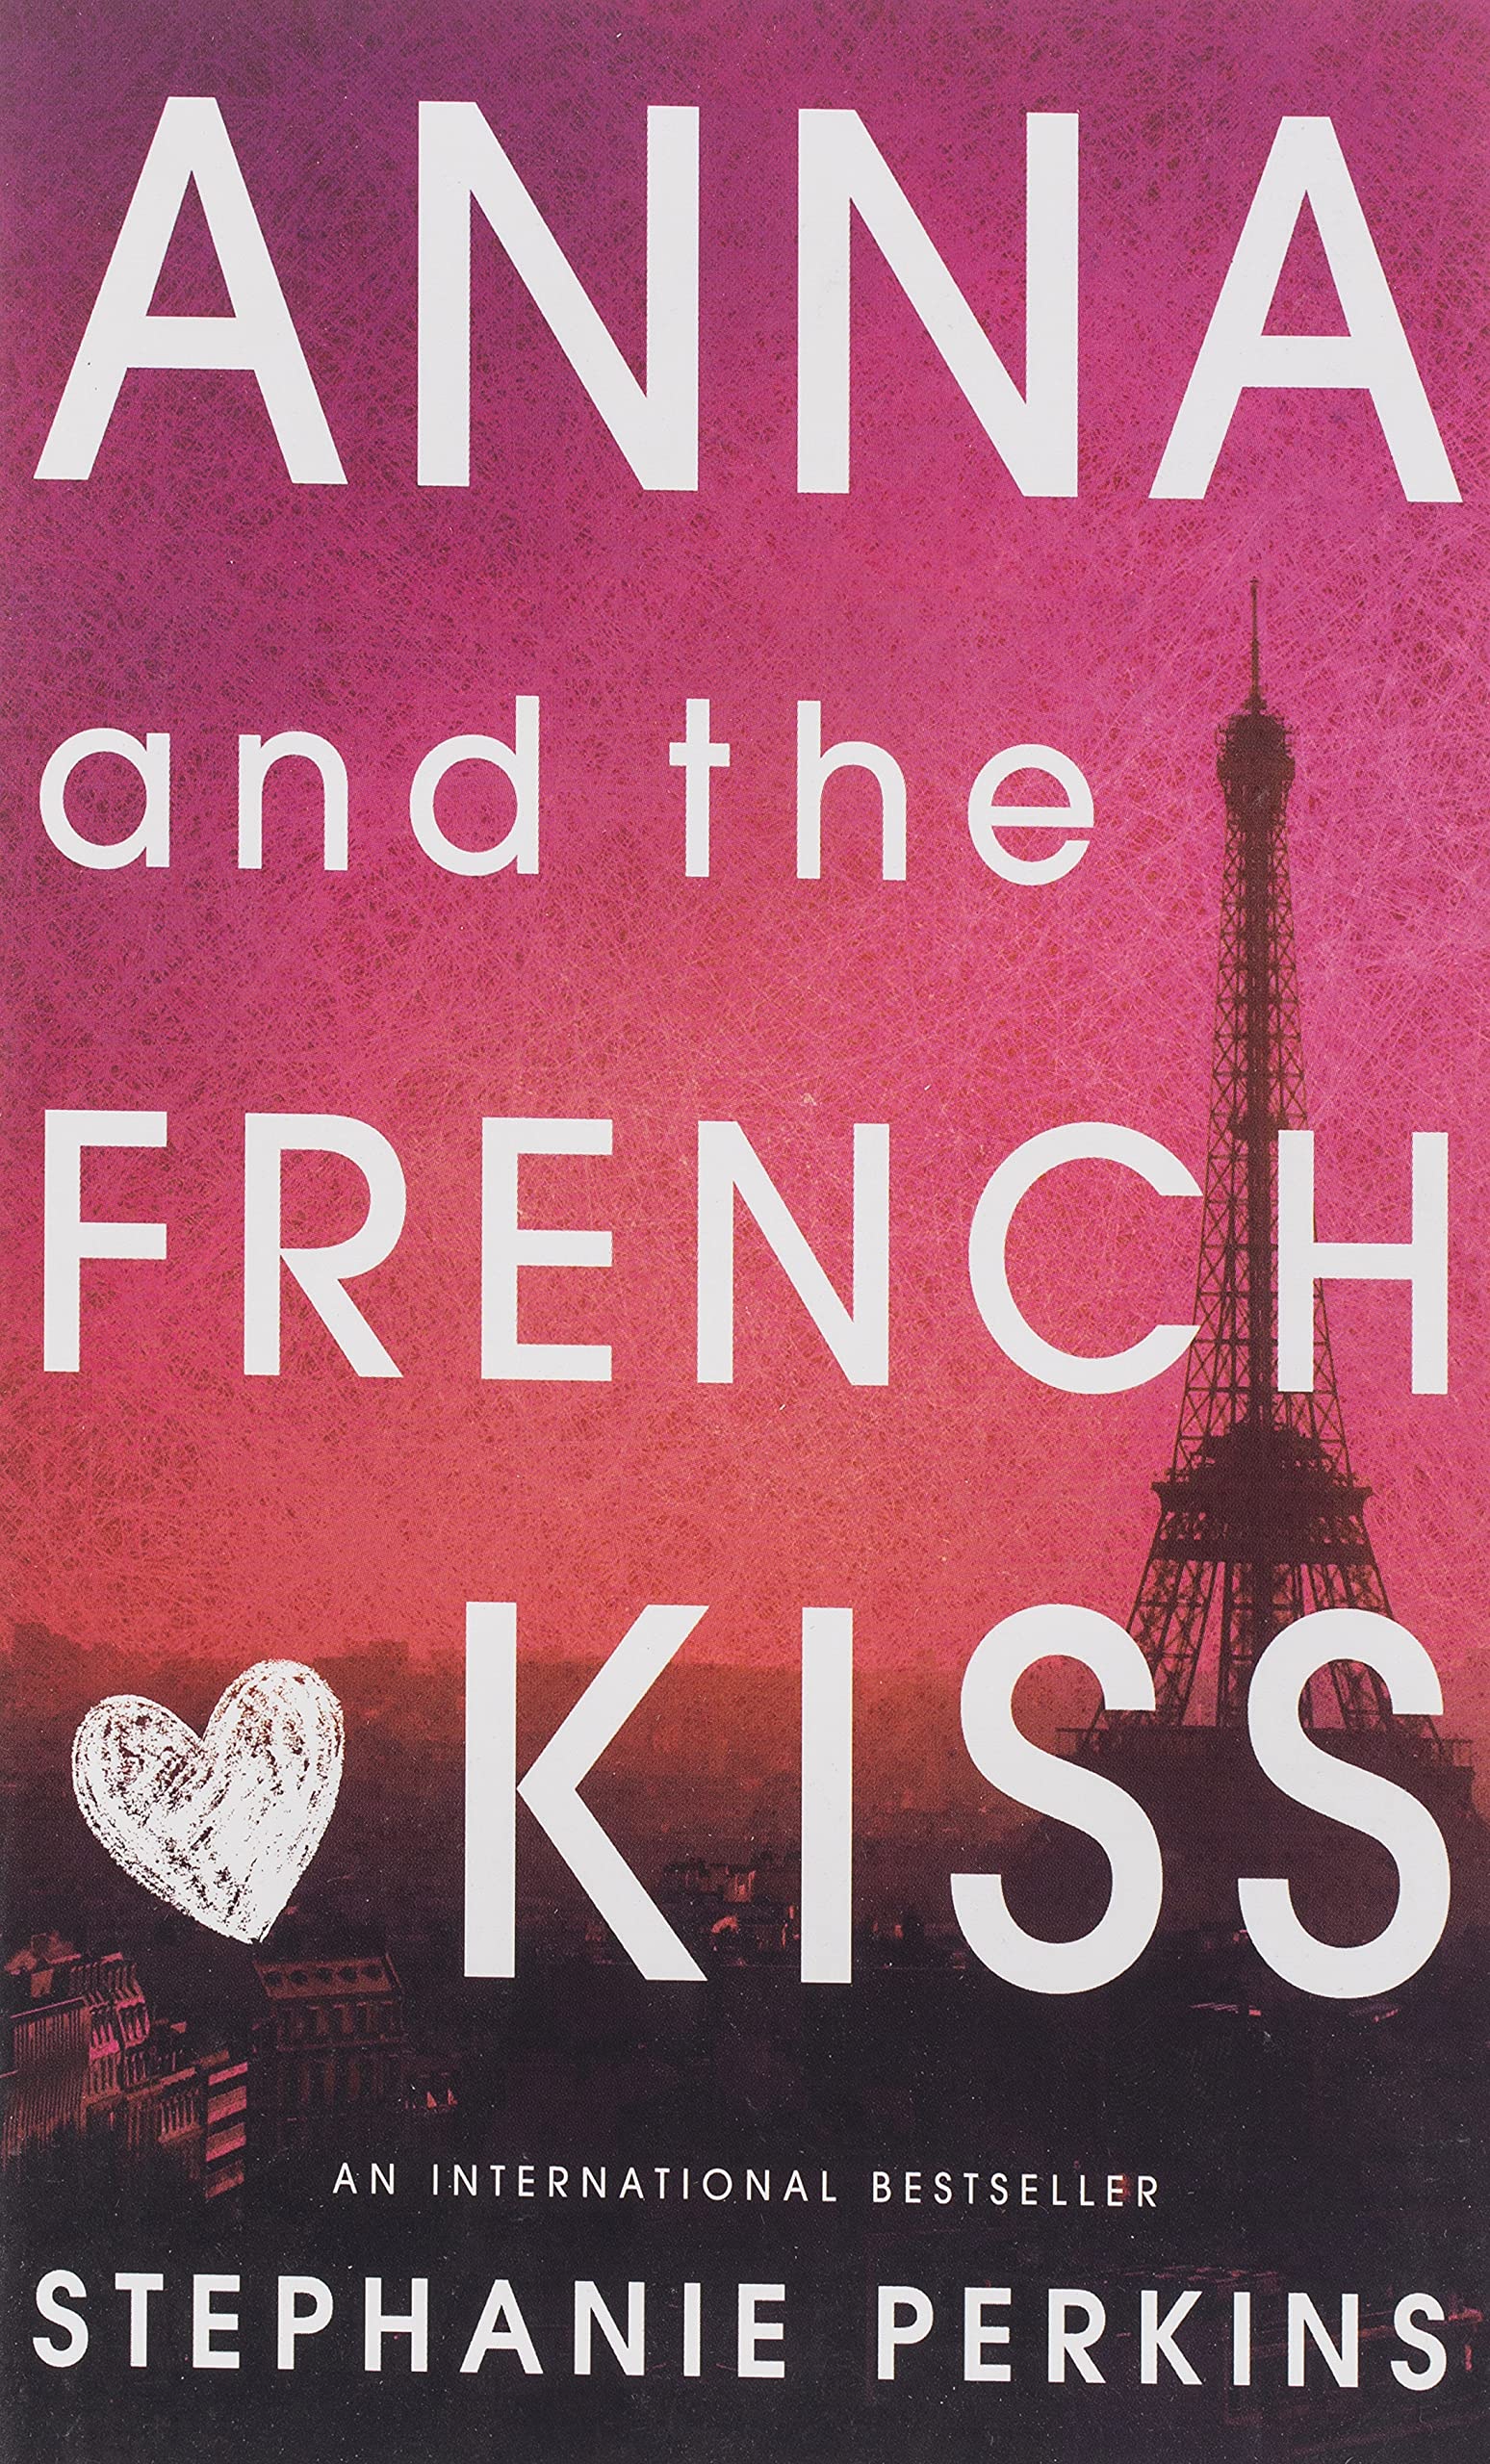 Couverture du livre Anna and the French Kiss de Stephanie Perkins